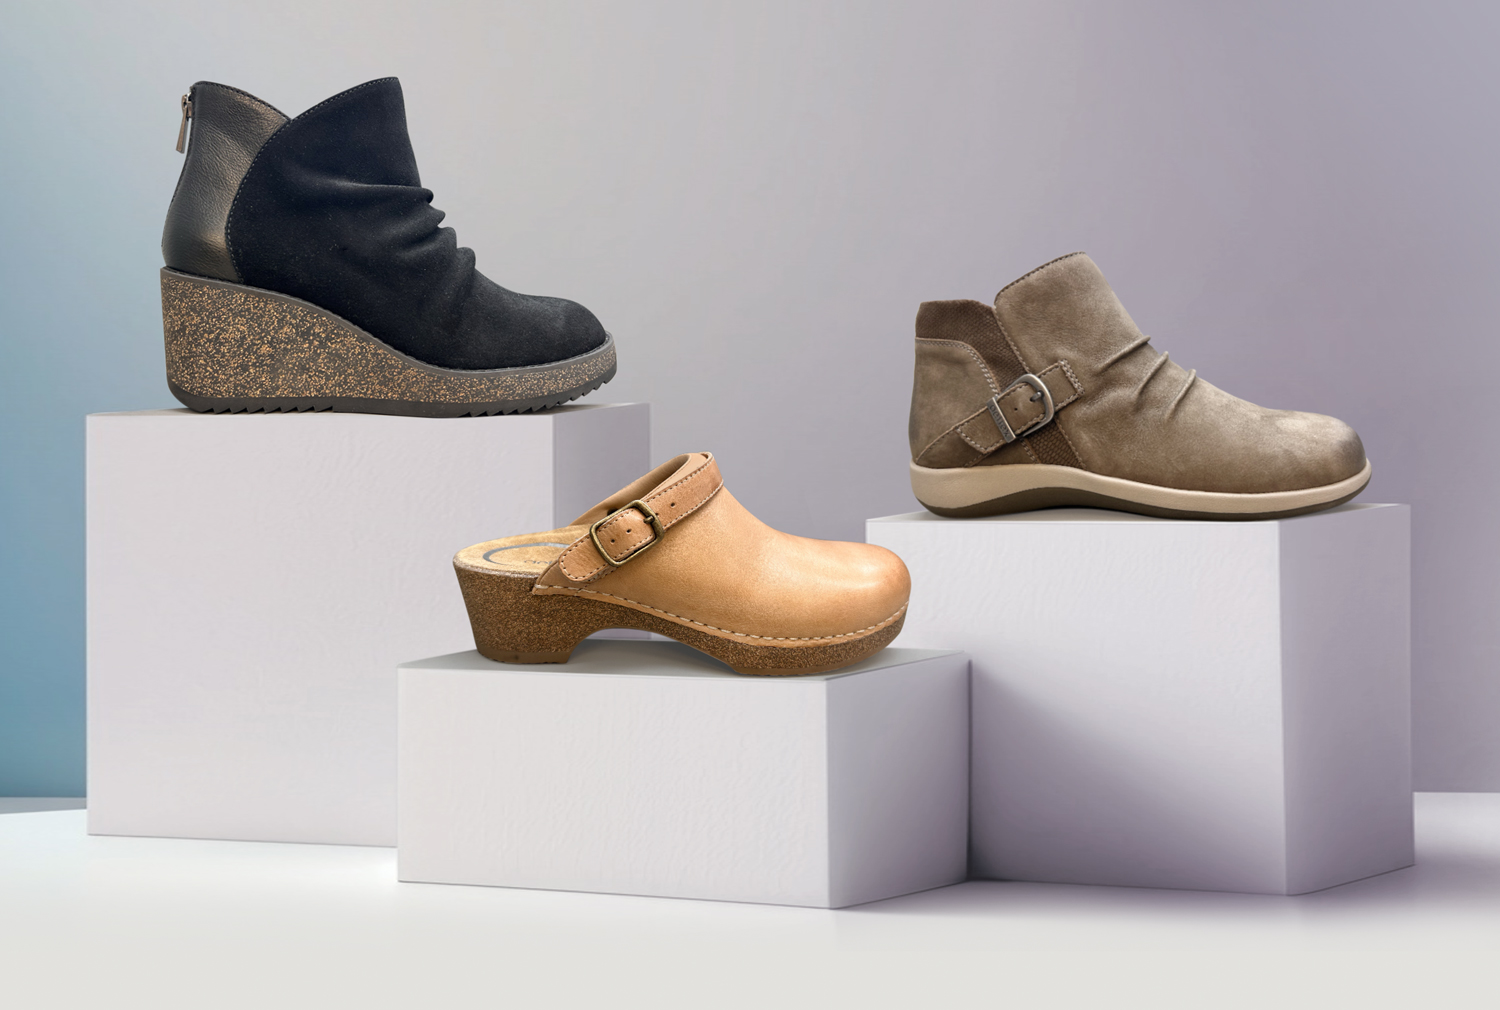 PAOTMBU Black & Brown Platform Sneaker - Women, Best Price and Reviews